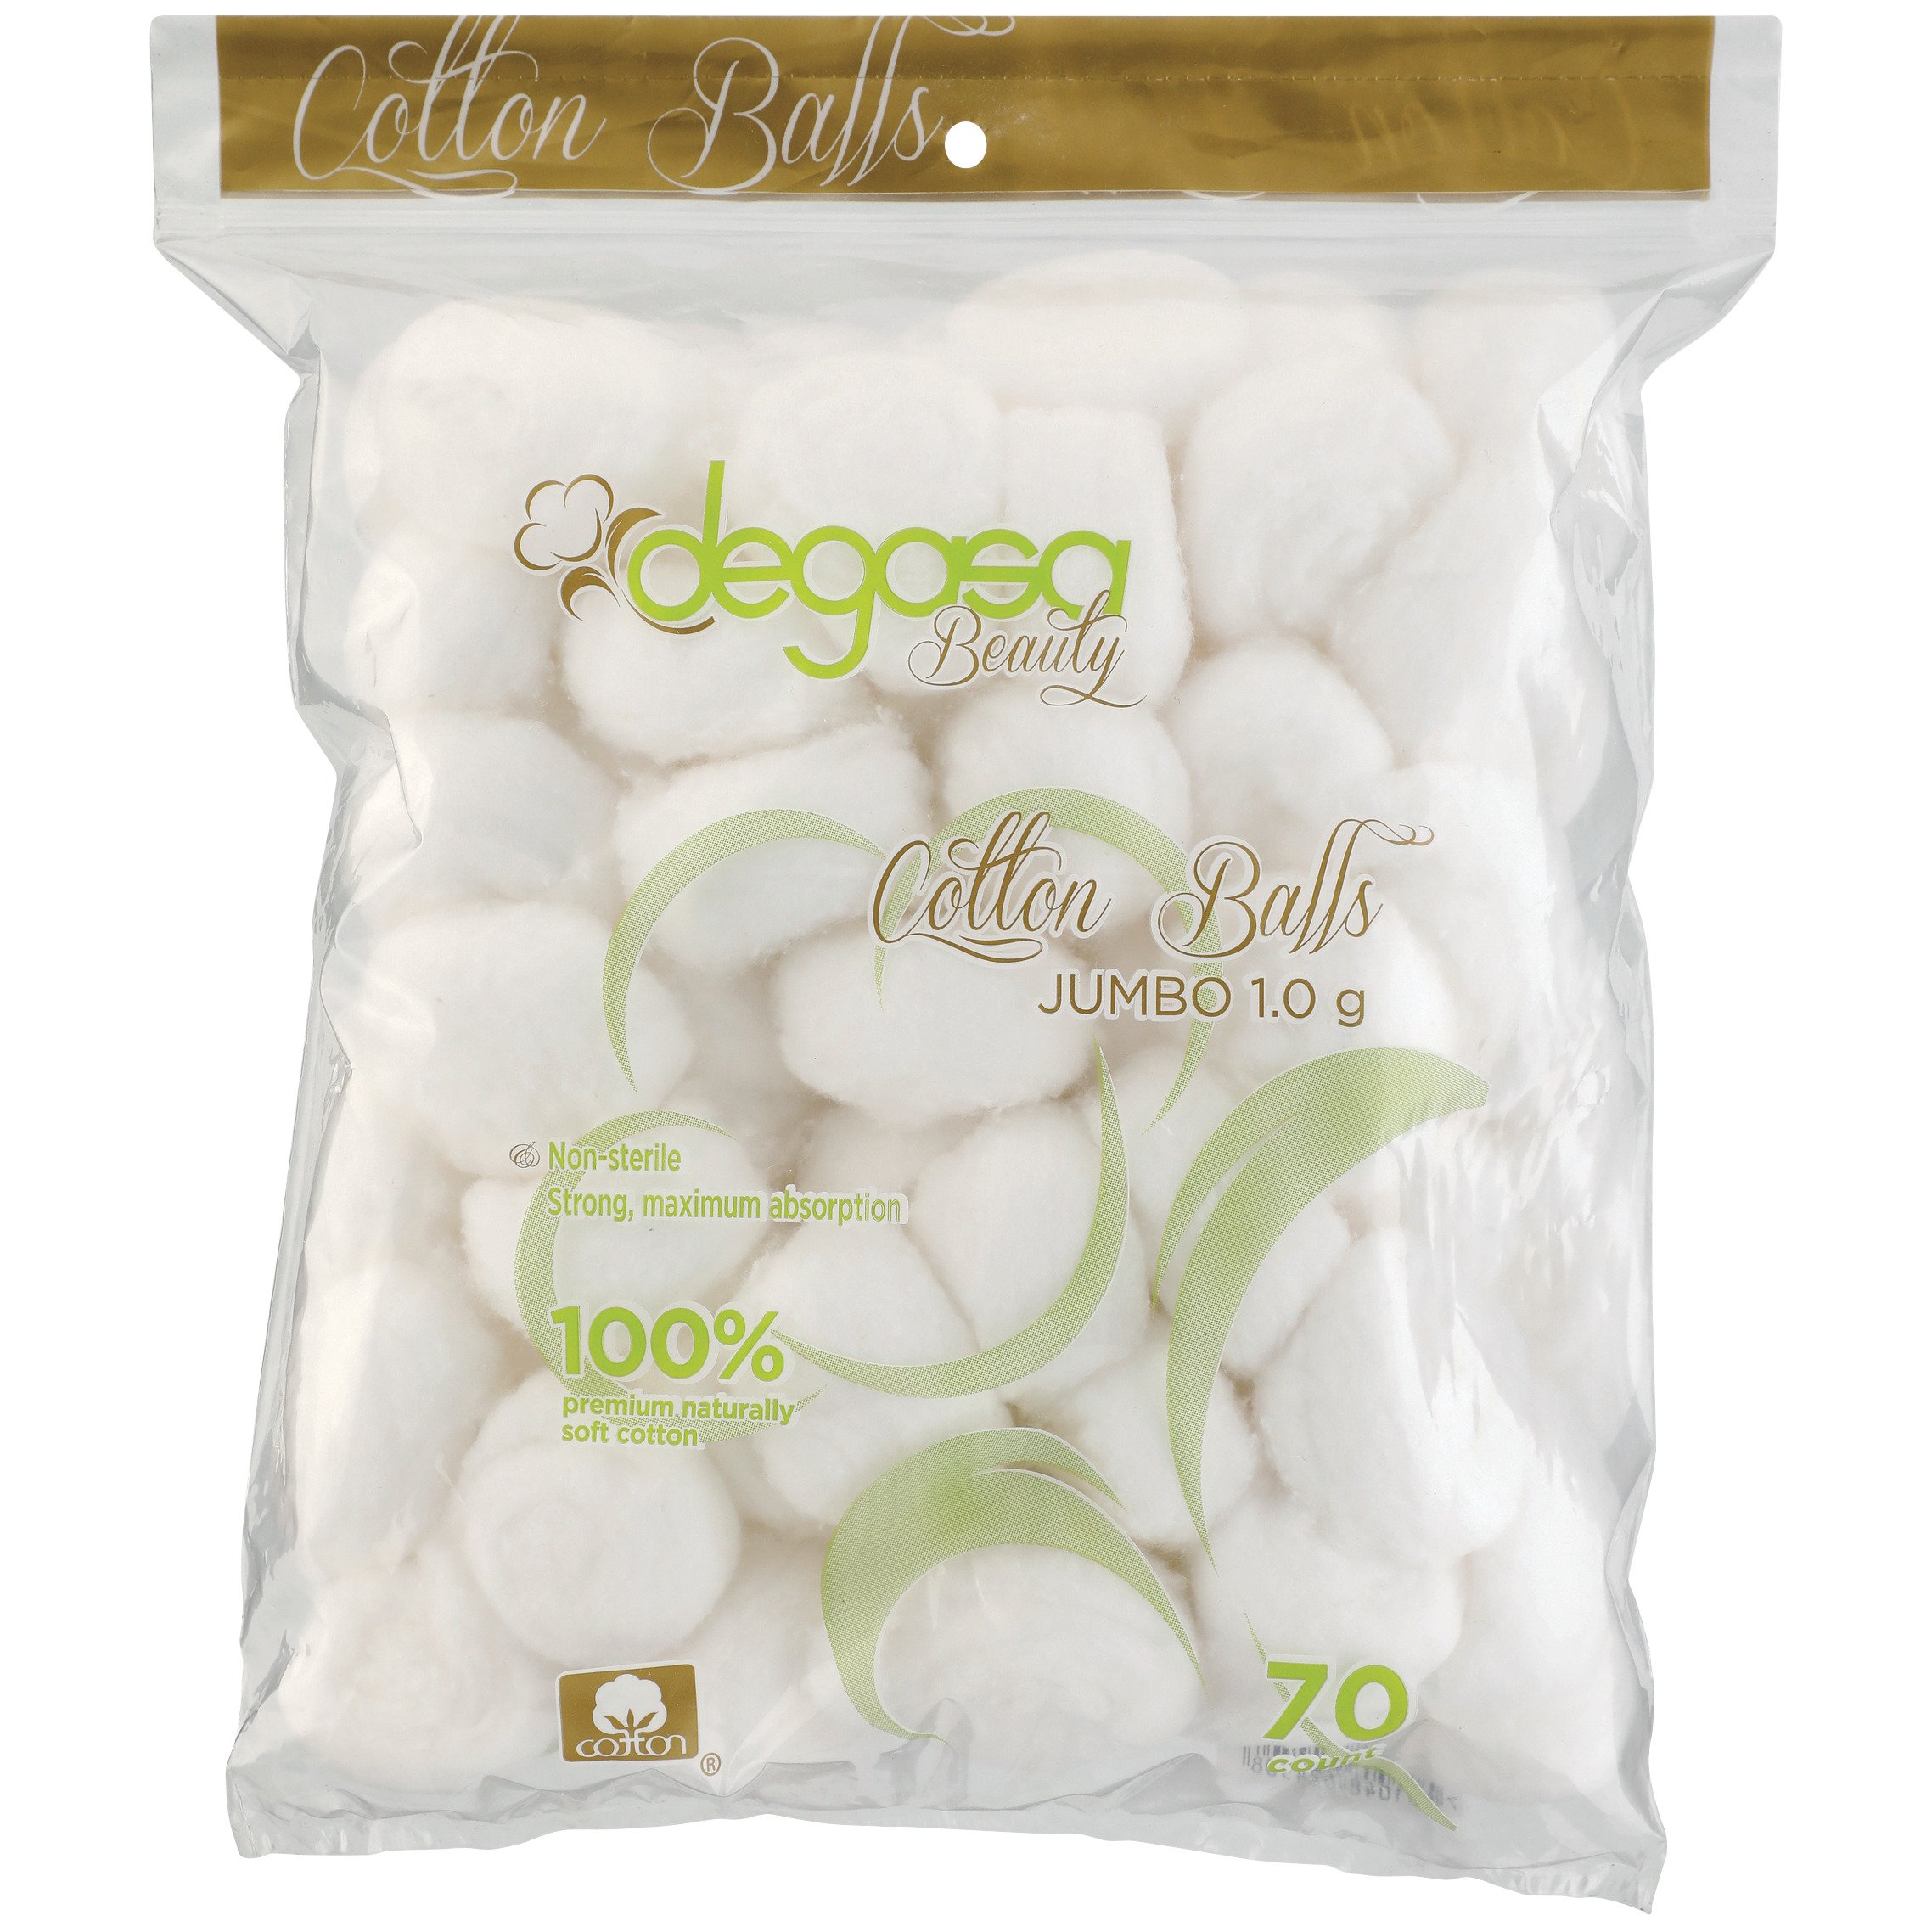 Degasa Beauty Cotton Balls Jumbo - Shop Cotton Balls & Swabs at H-E-B